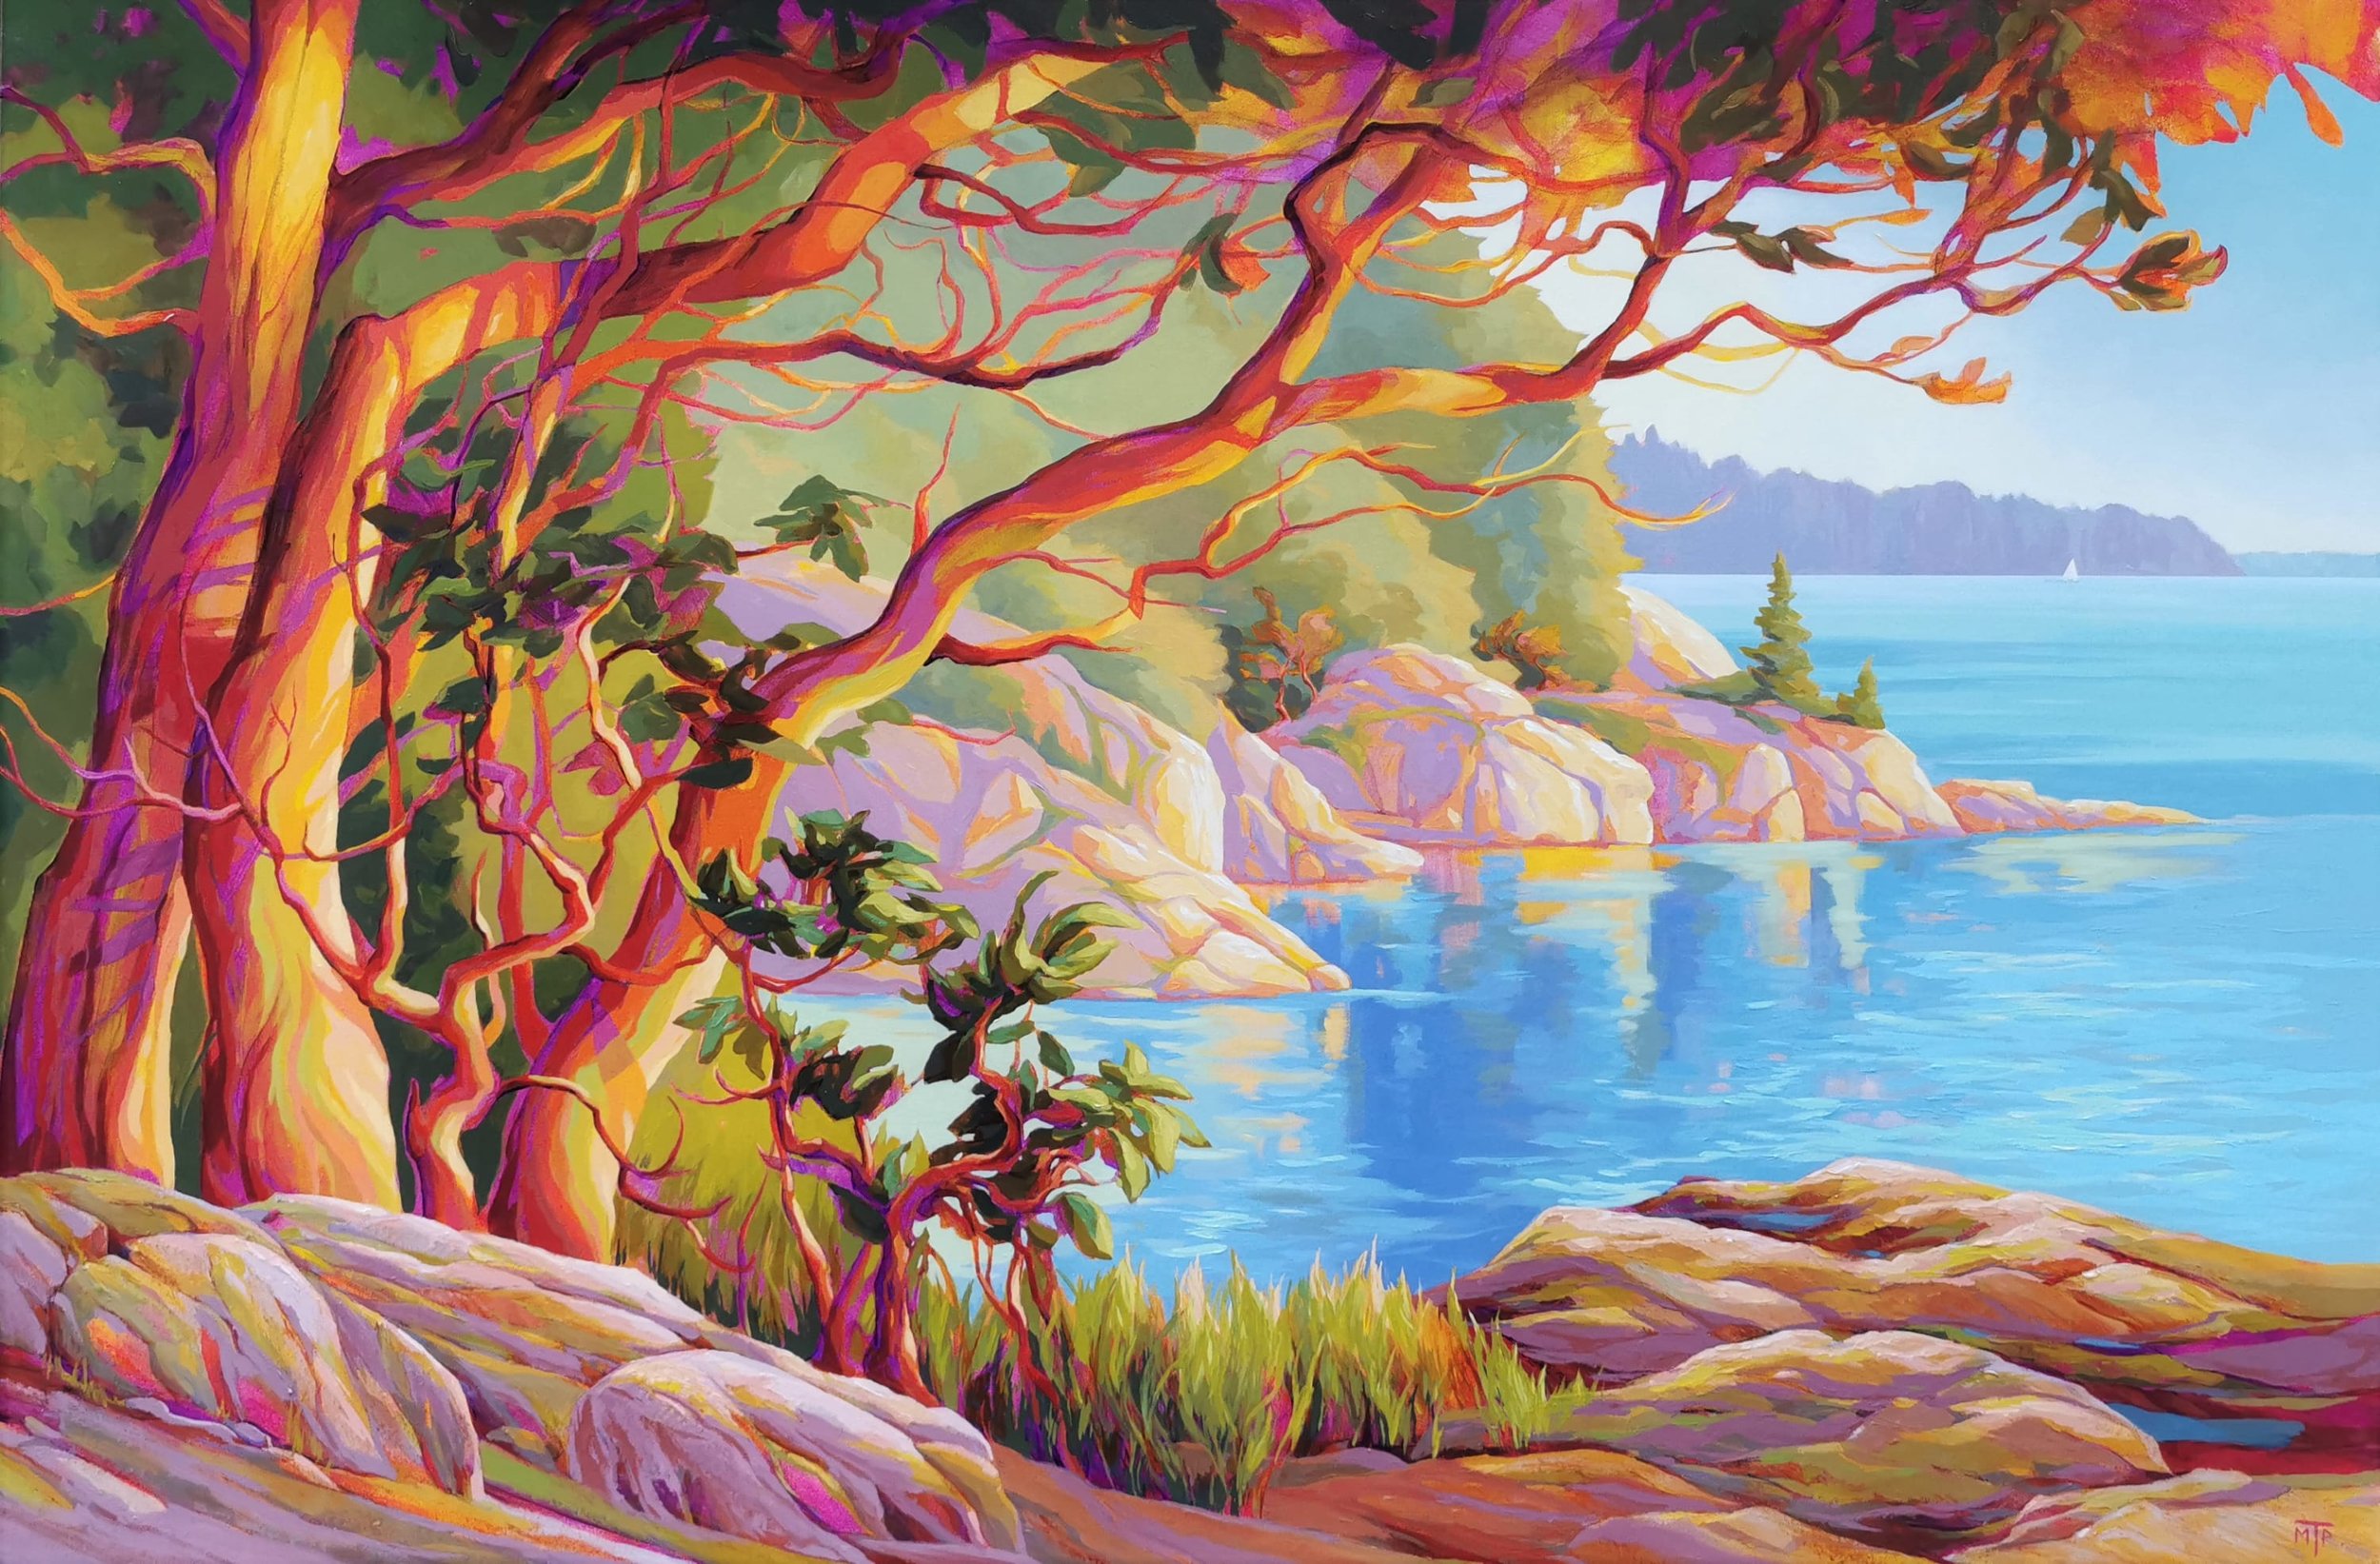  Coastal Light   Acrylic on canvas, 40x60 inches, $6500   